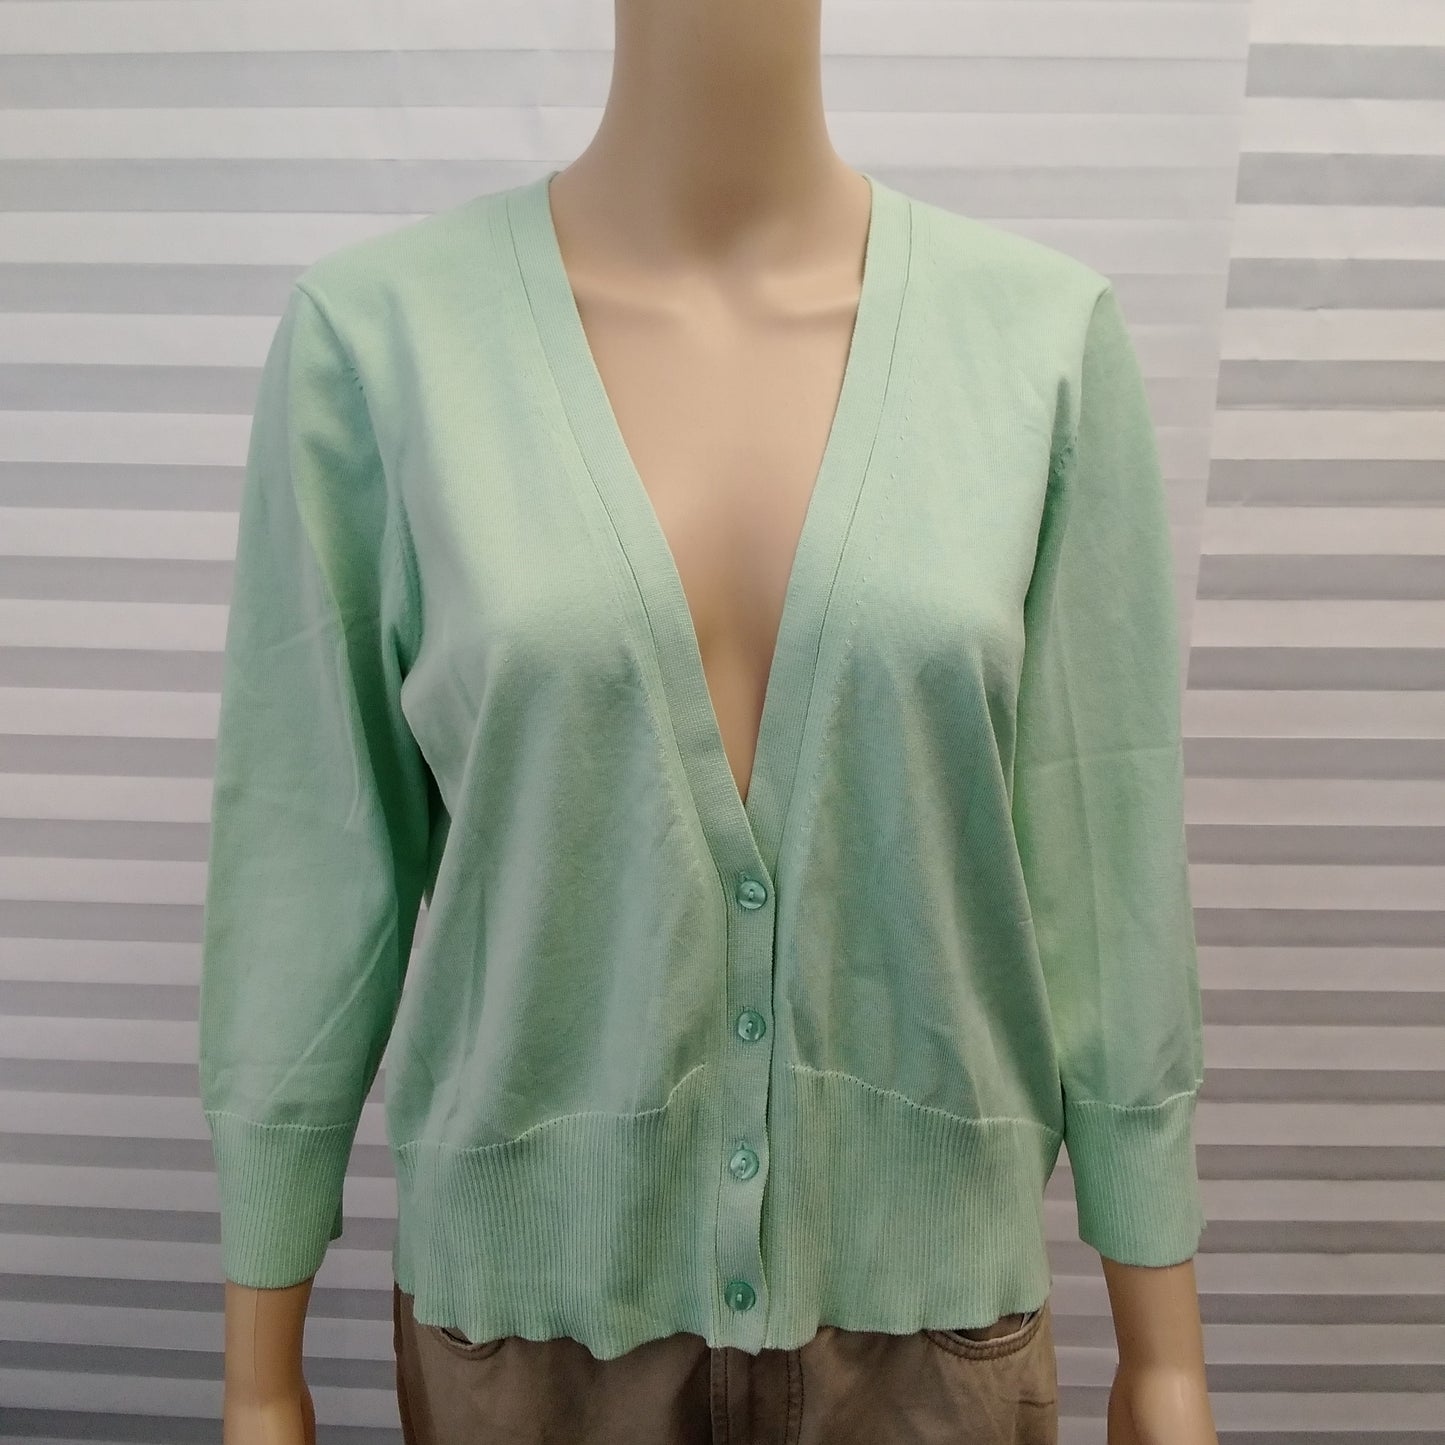 NWT - Pendleton Women's Light Green Silk Blend 3/4 Sleeve cardigan Sweater - Size: XL